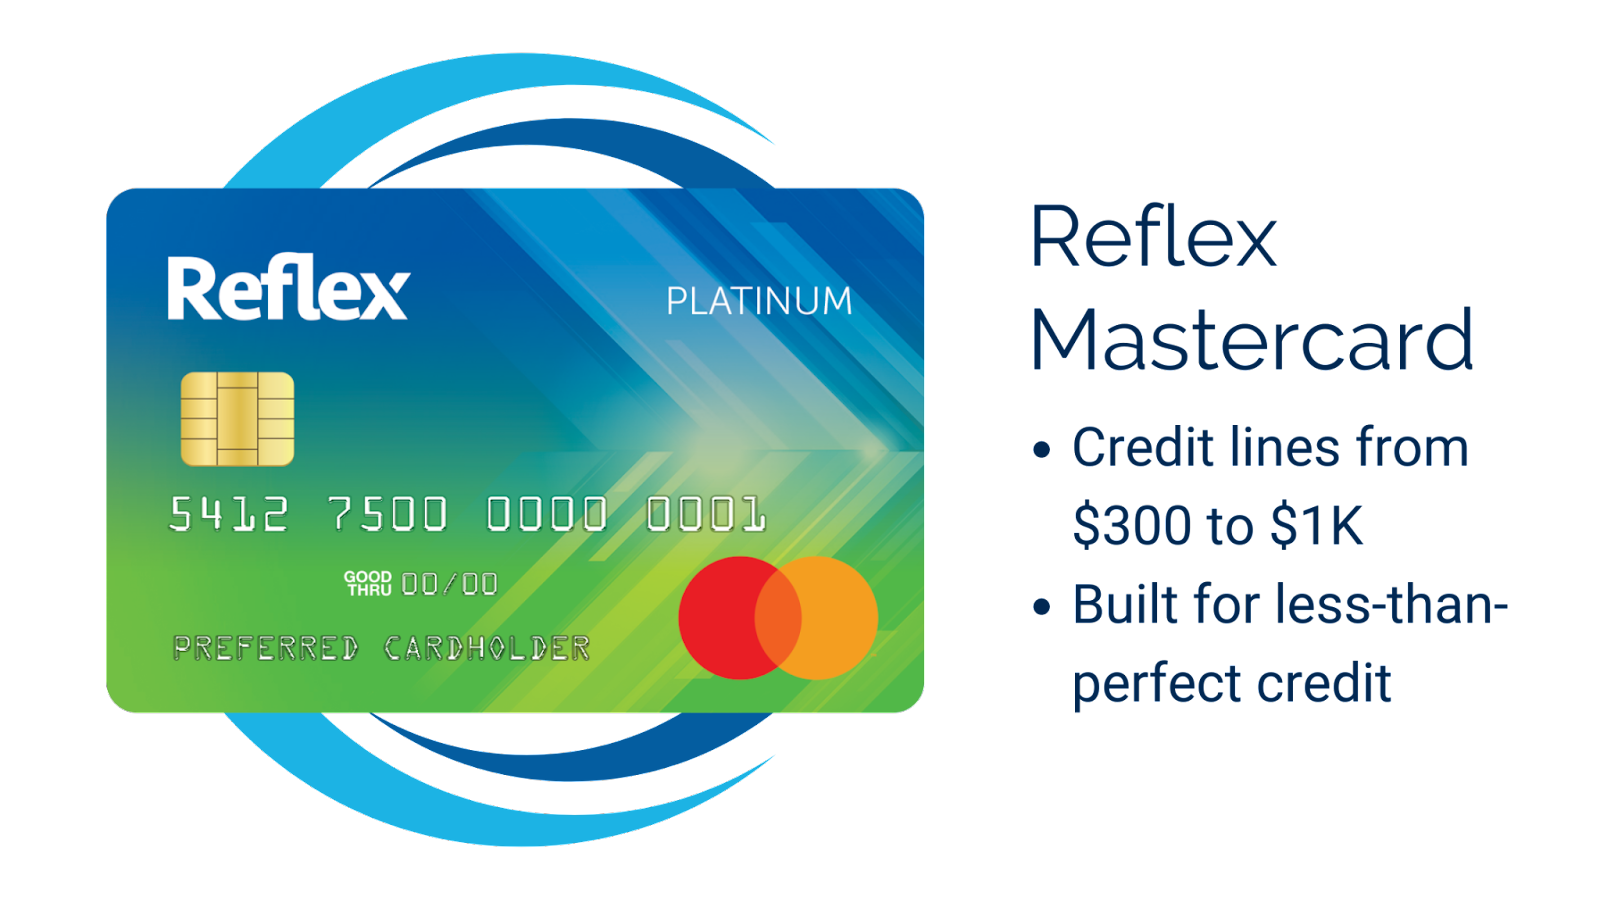 Celtic Bank Credit Cards: Reflex & Surge